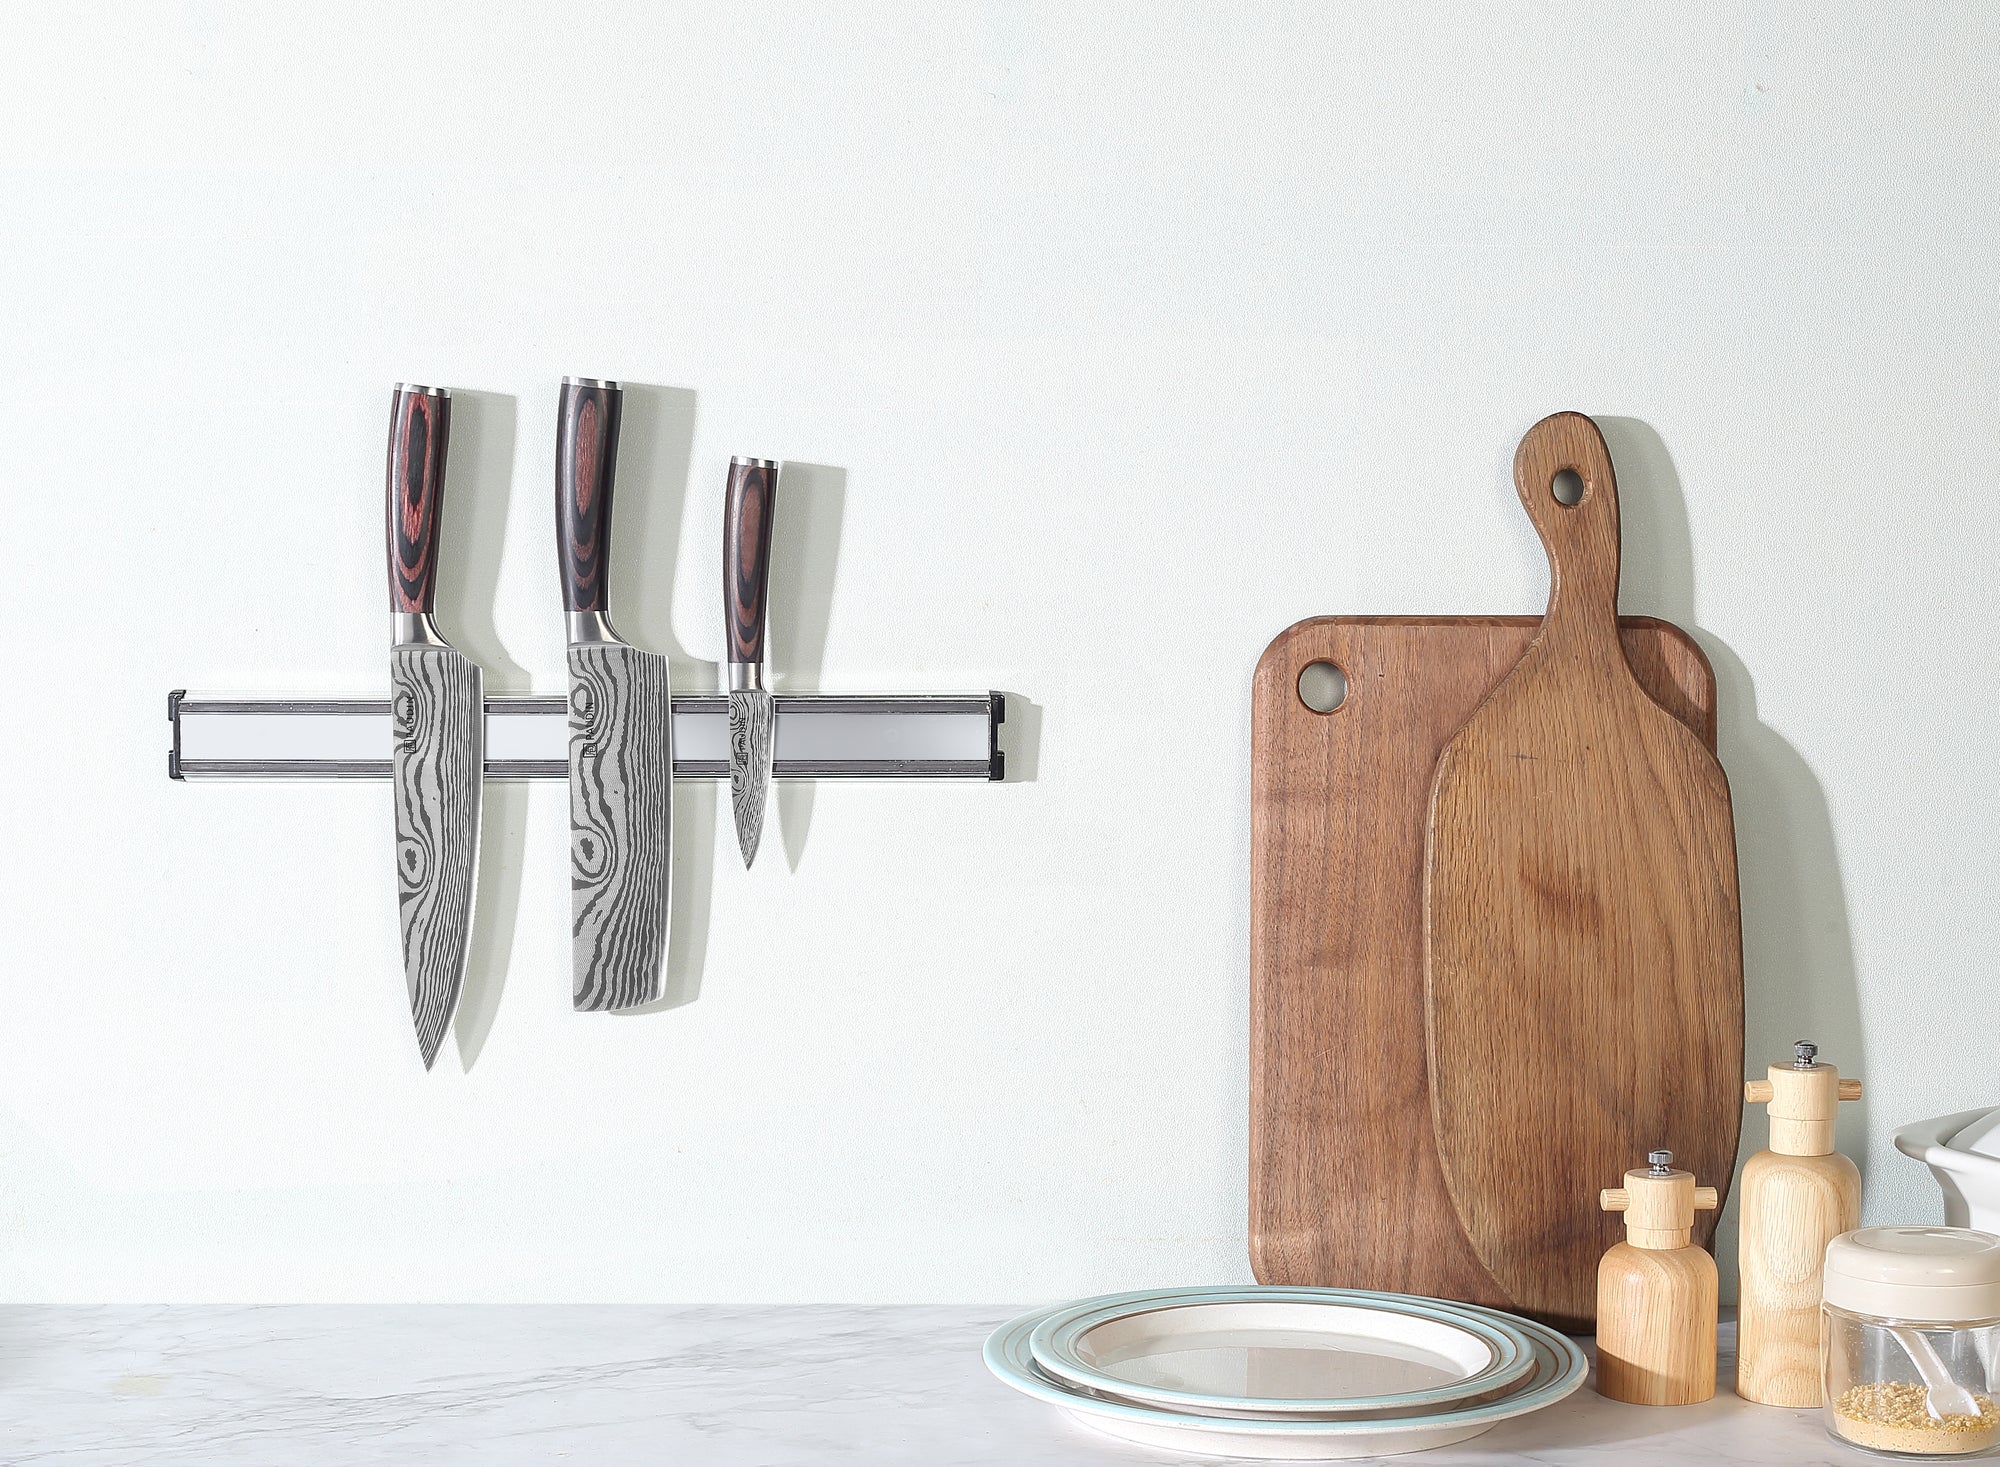 PAUDIN Kitchen Knife Set, 3-Pieces Chef Knife Set with Razor-Sharp